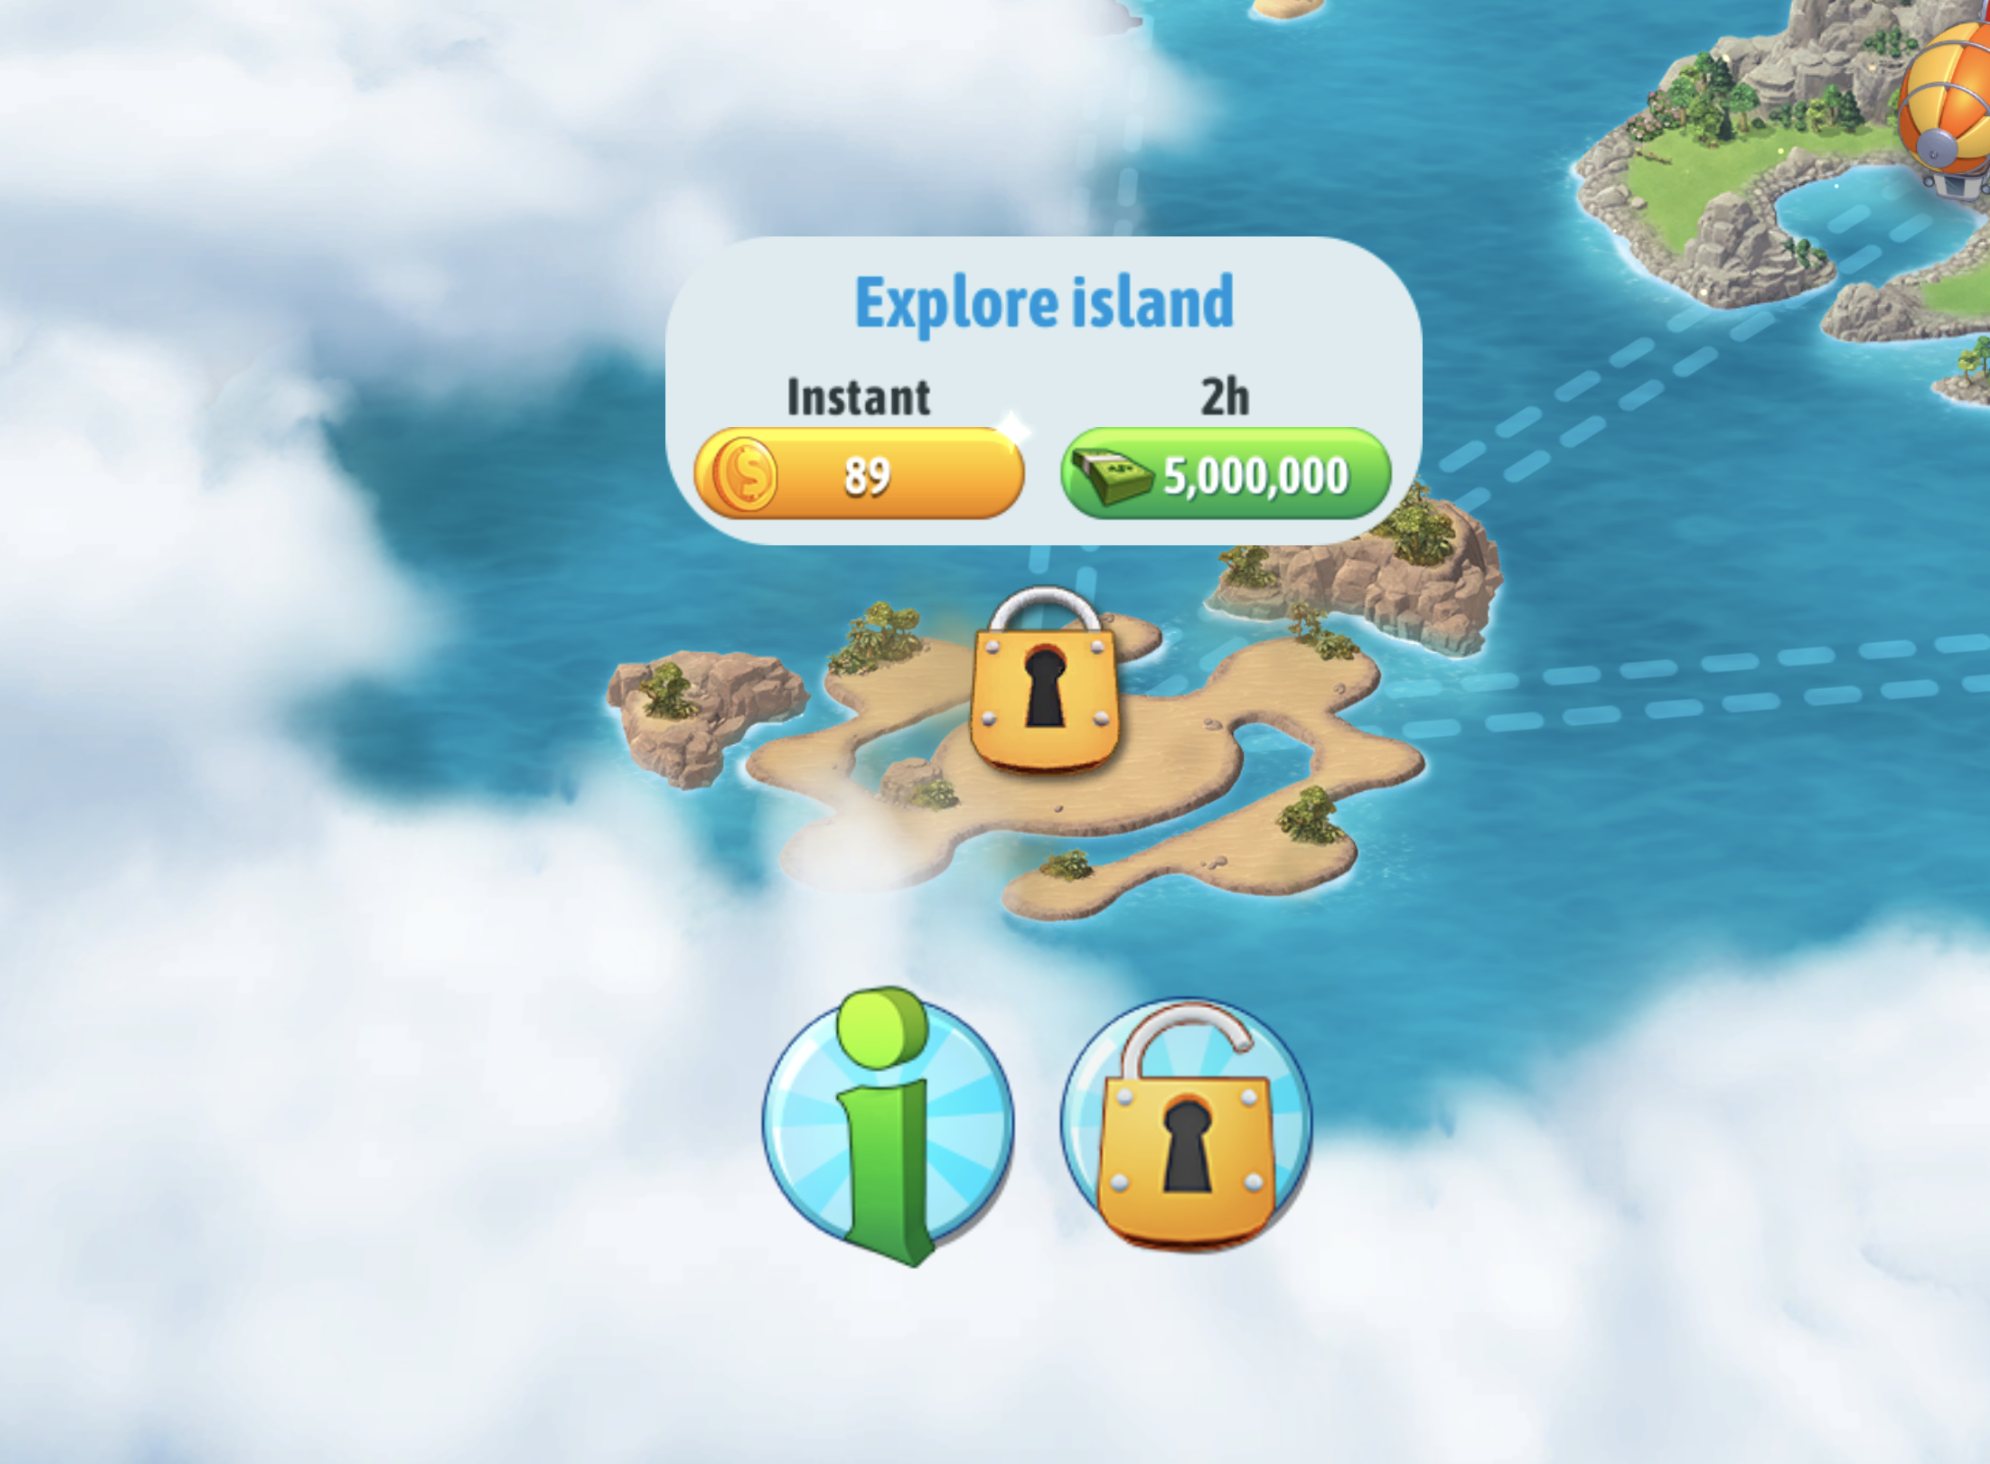 Island costing €5,000,000